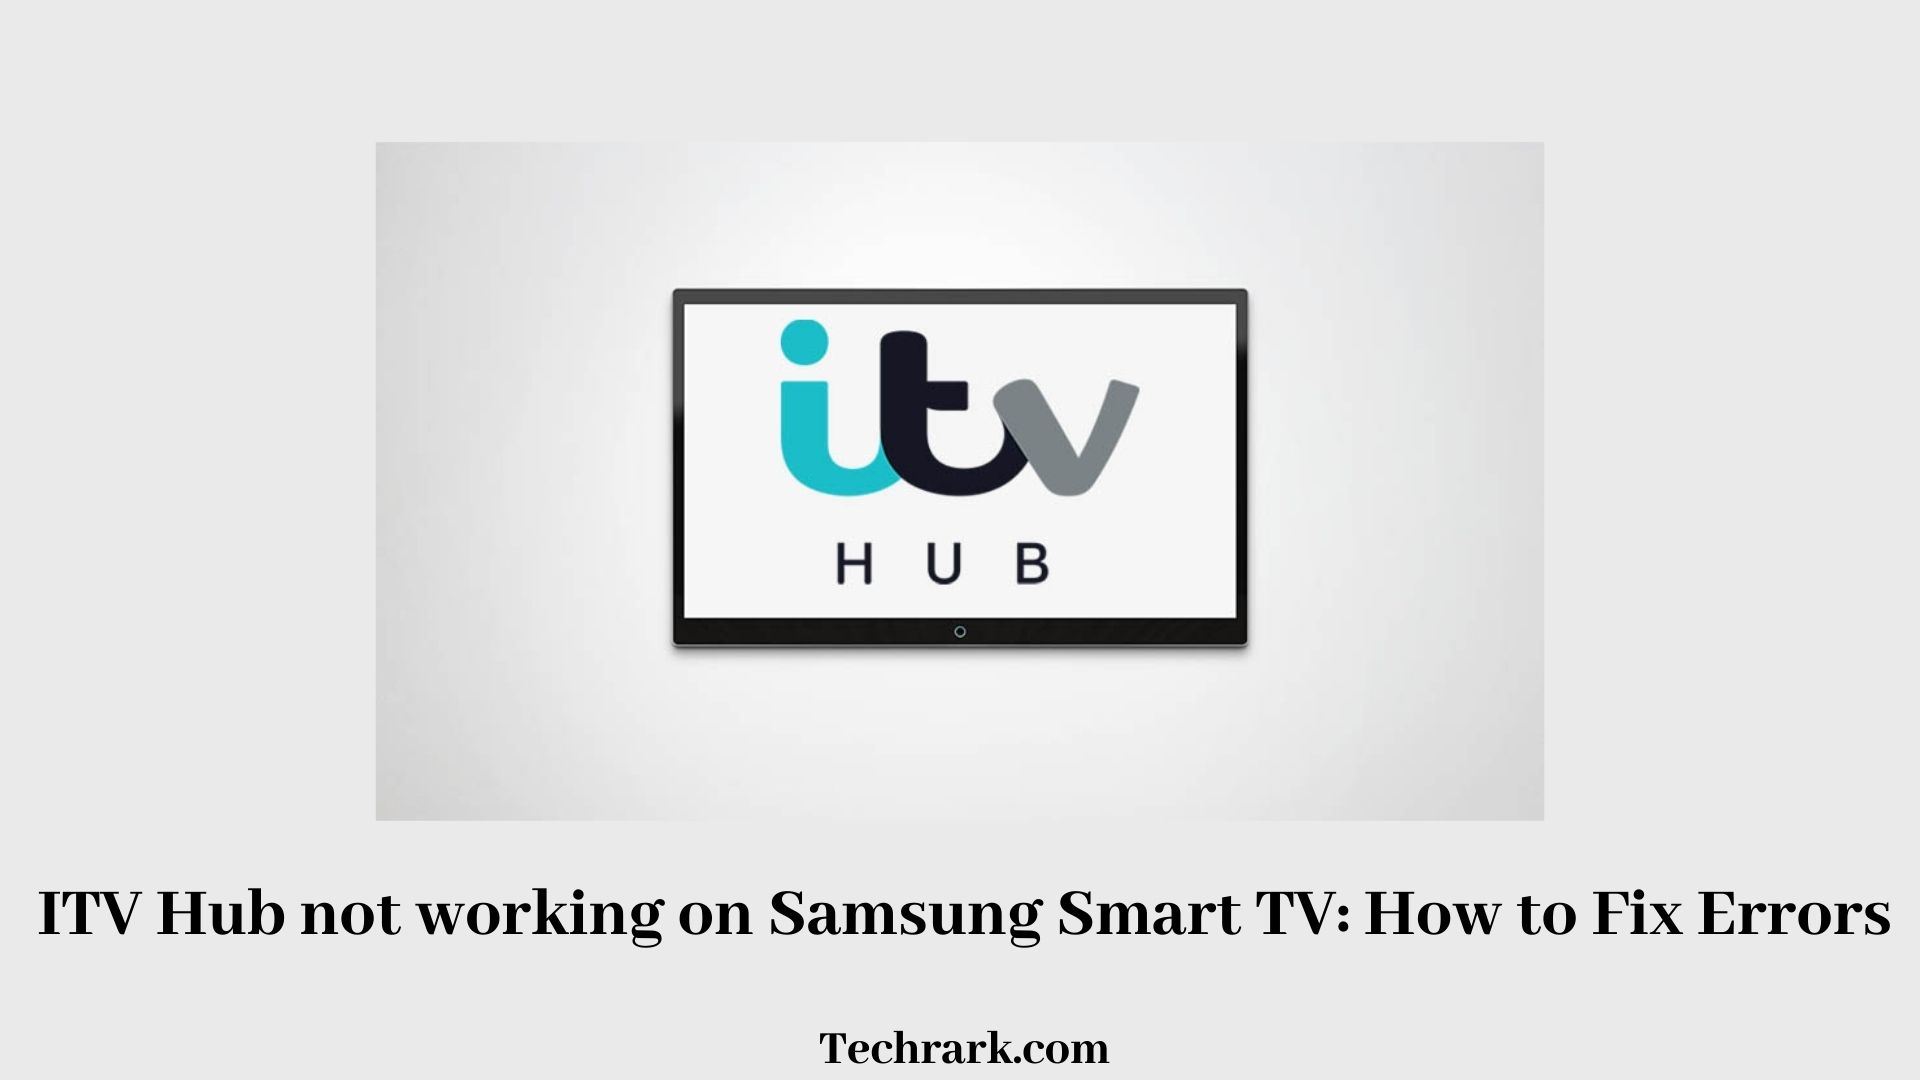 ITV Hub not working on Samsung Smart TV